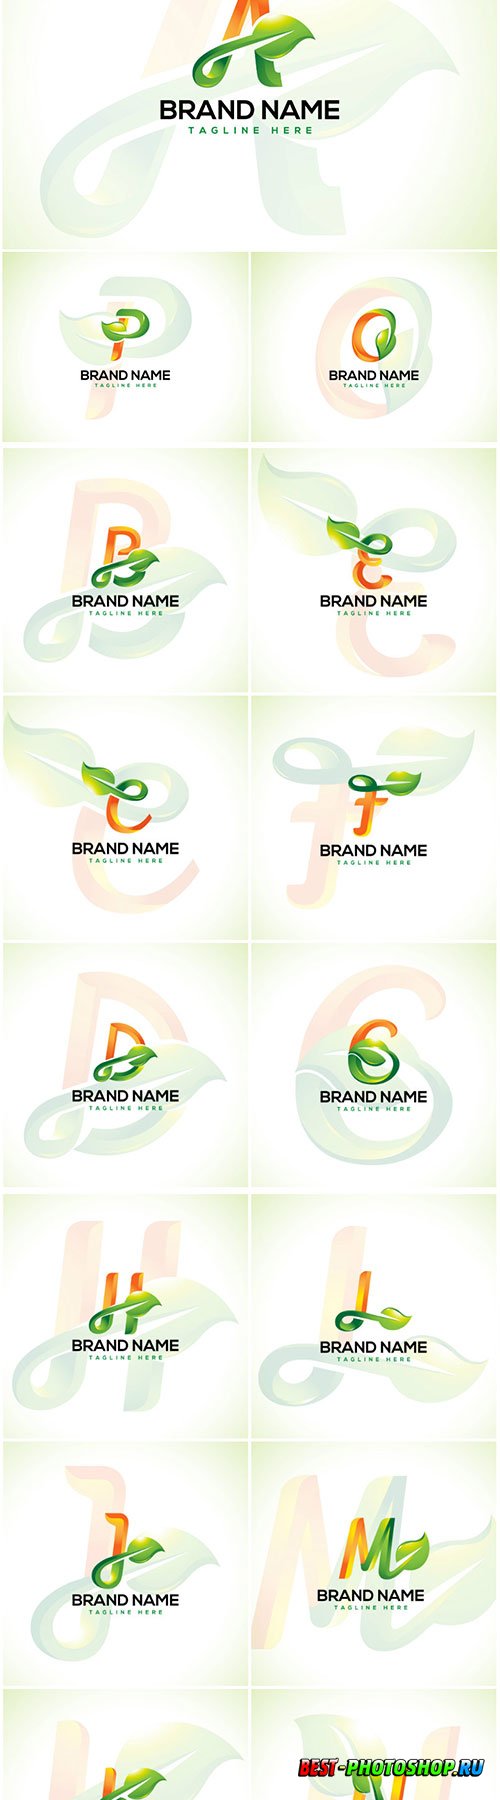 Leaf logo and initial letter logo concept